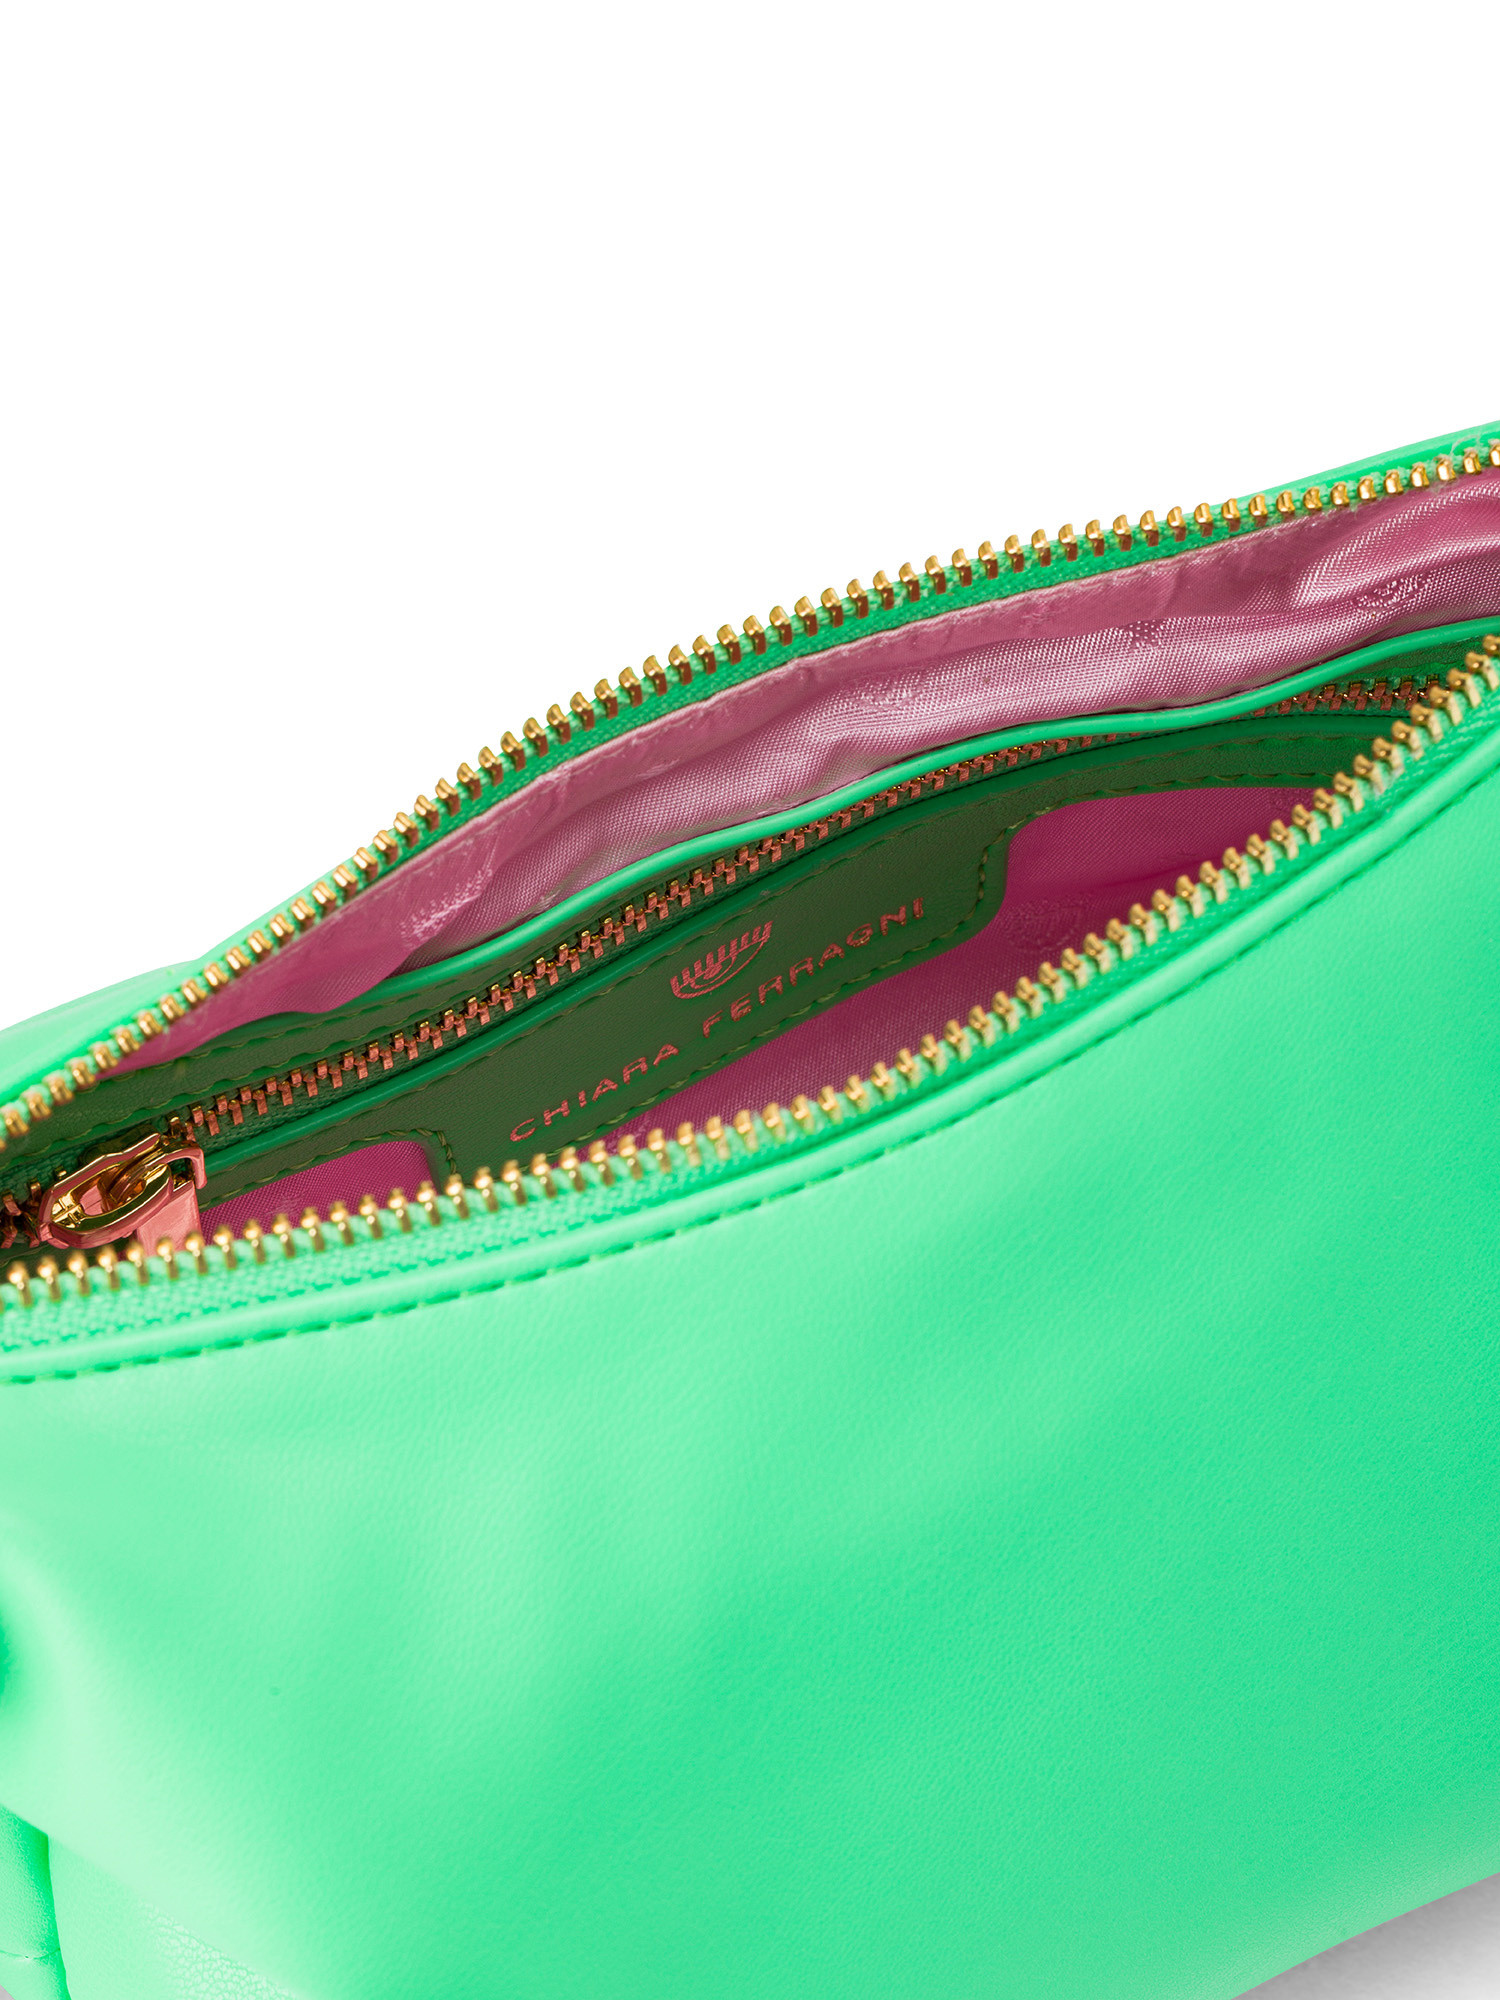 Chiara Ferragni - Range E eye star lock bag, Green, large image number 2